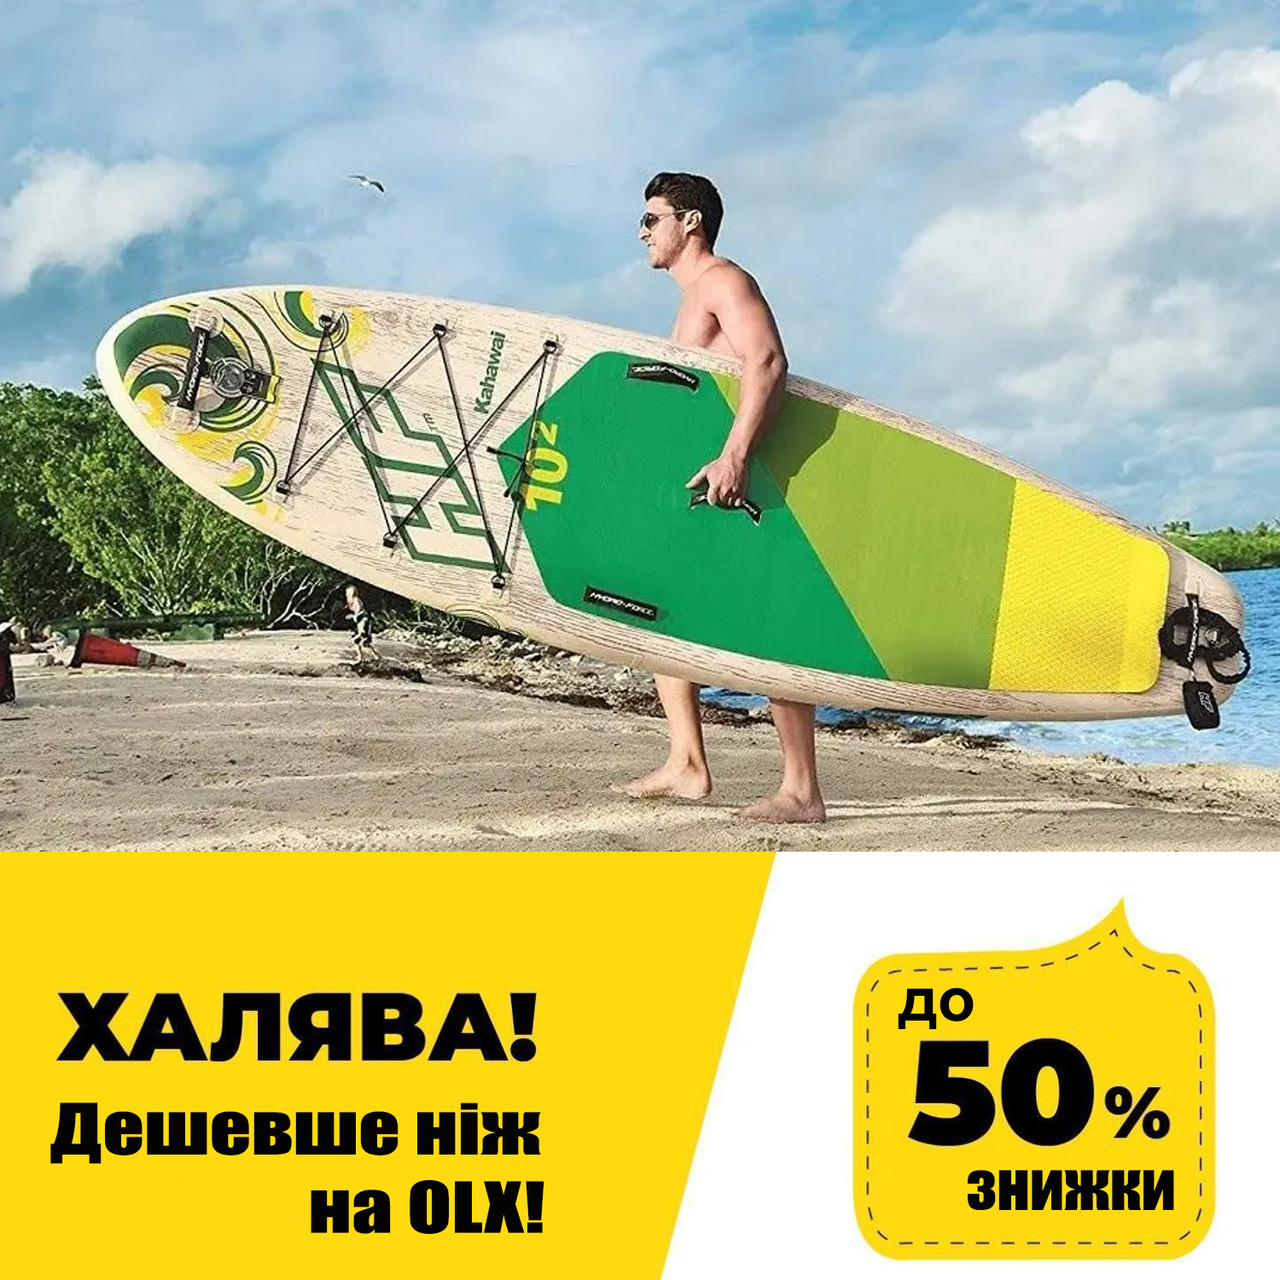 Дошка для SUP серфінгу BESTWAY SUP-БОРД 65308 Жовто-зелена (310-86-15 см) | Надувна дошка для серфінгу